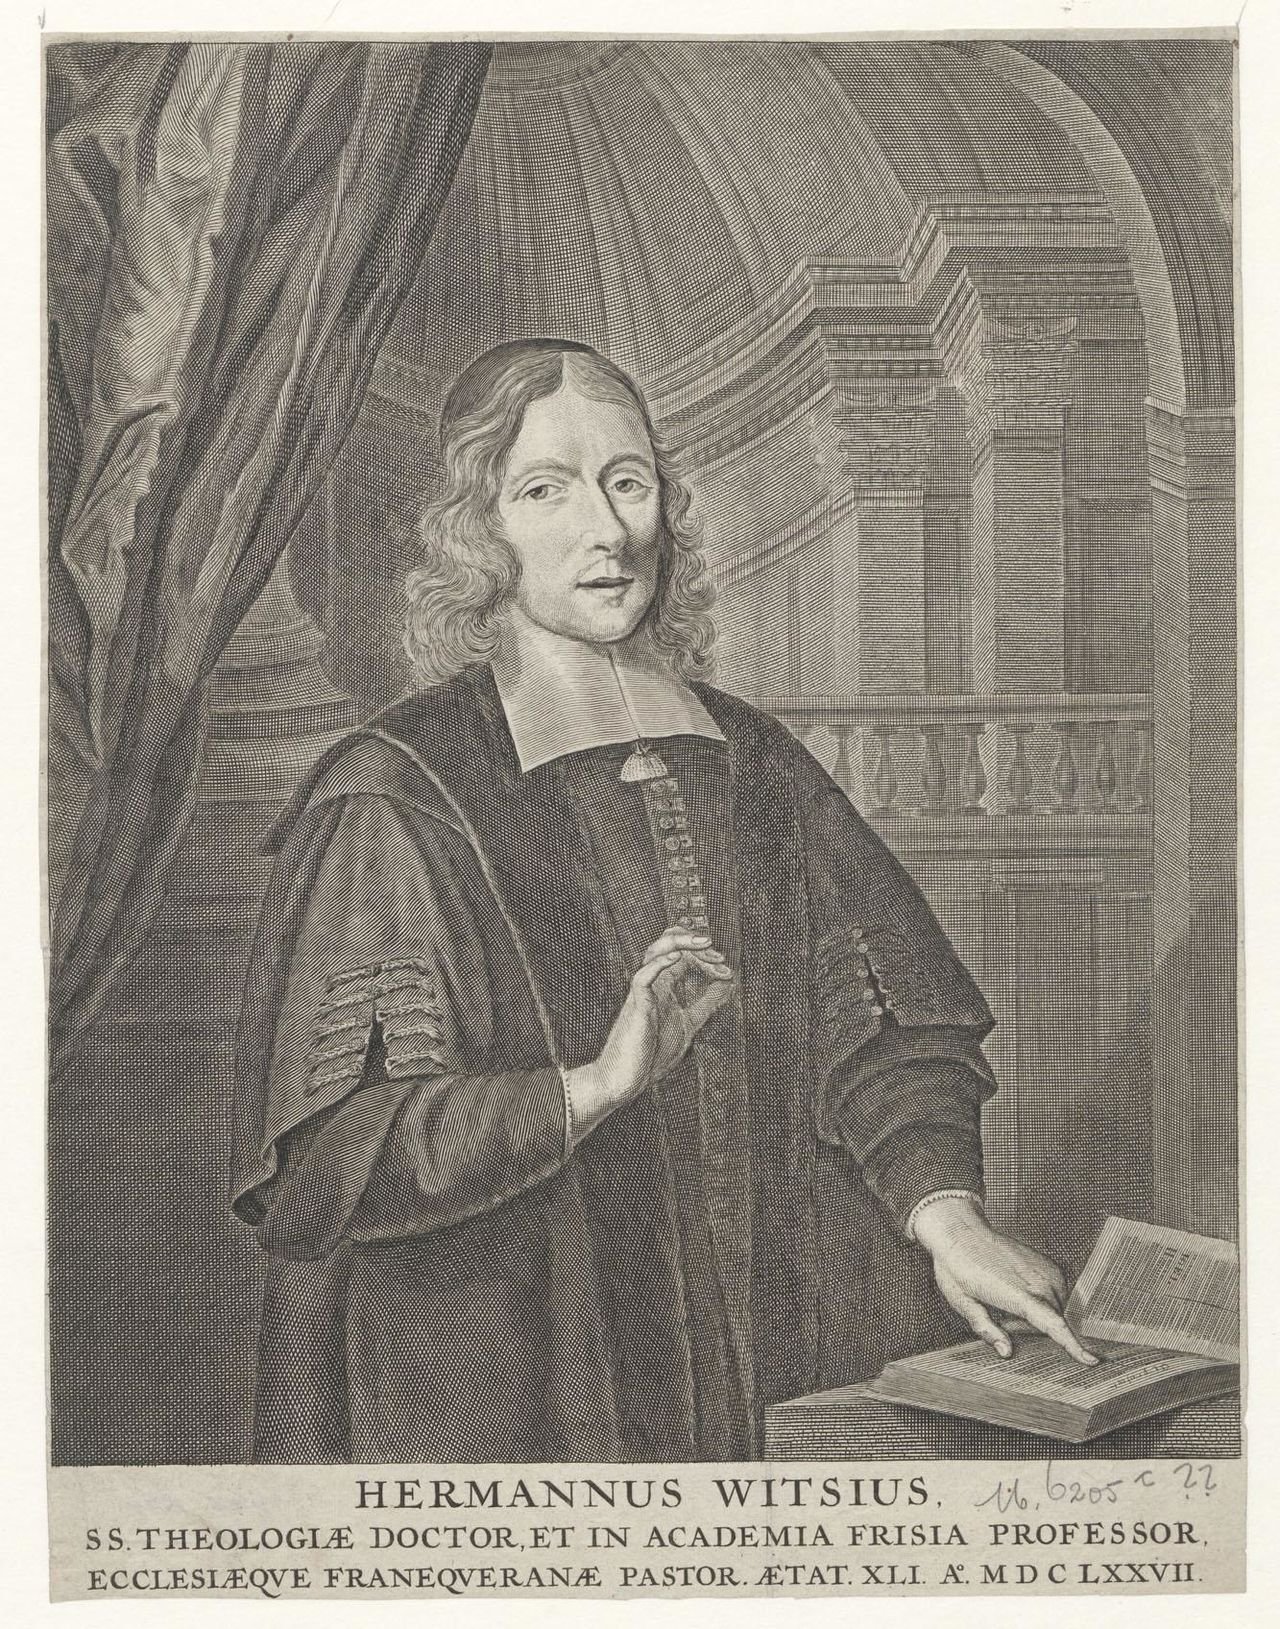 12 février 1636 : Naissance d’Herman Witsius